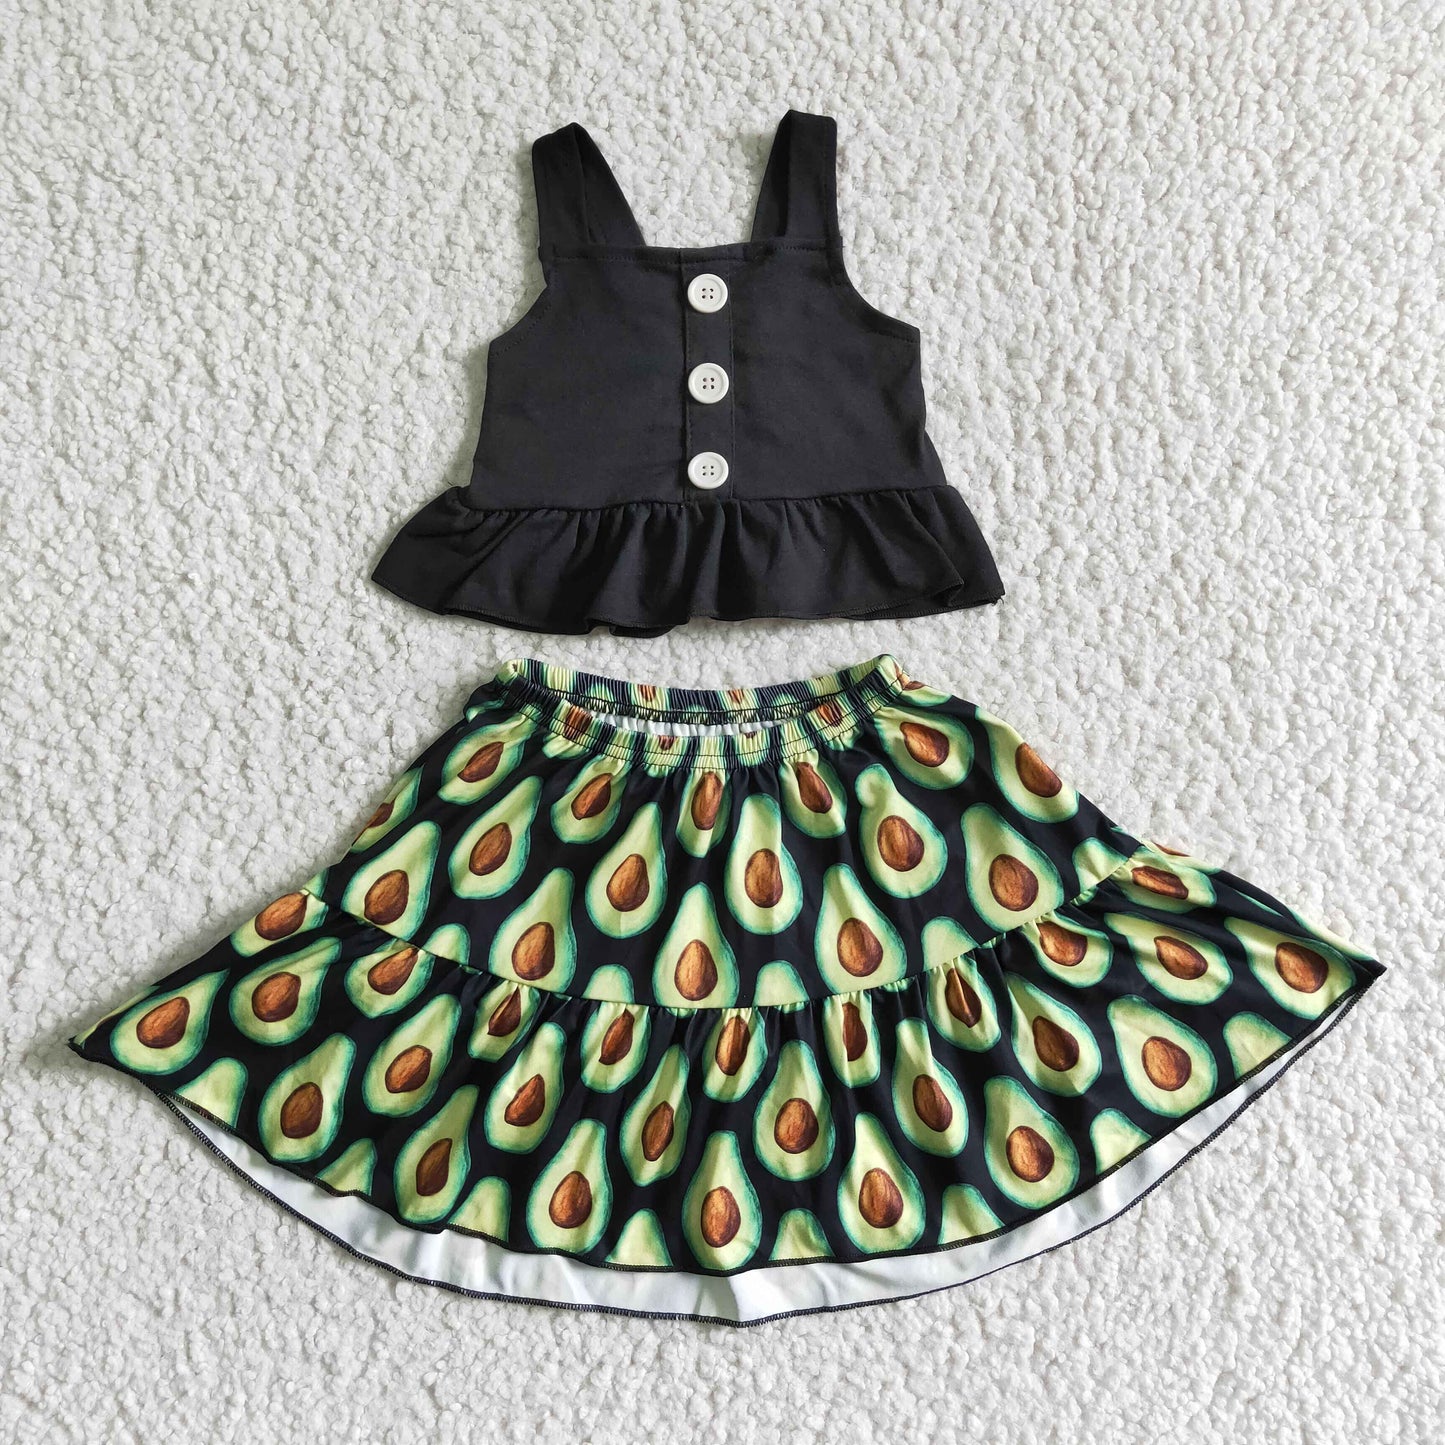 Black crop top avocado skirt baby girls summer outfits